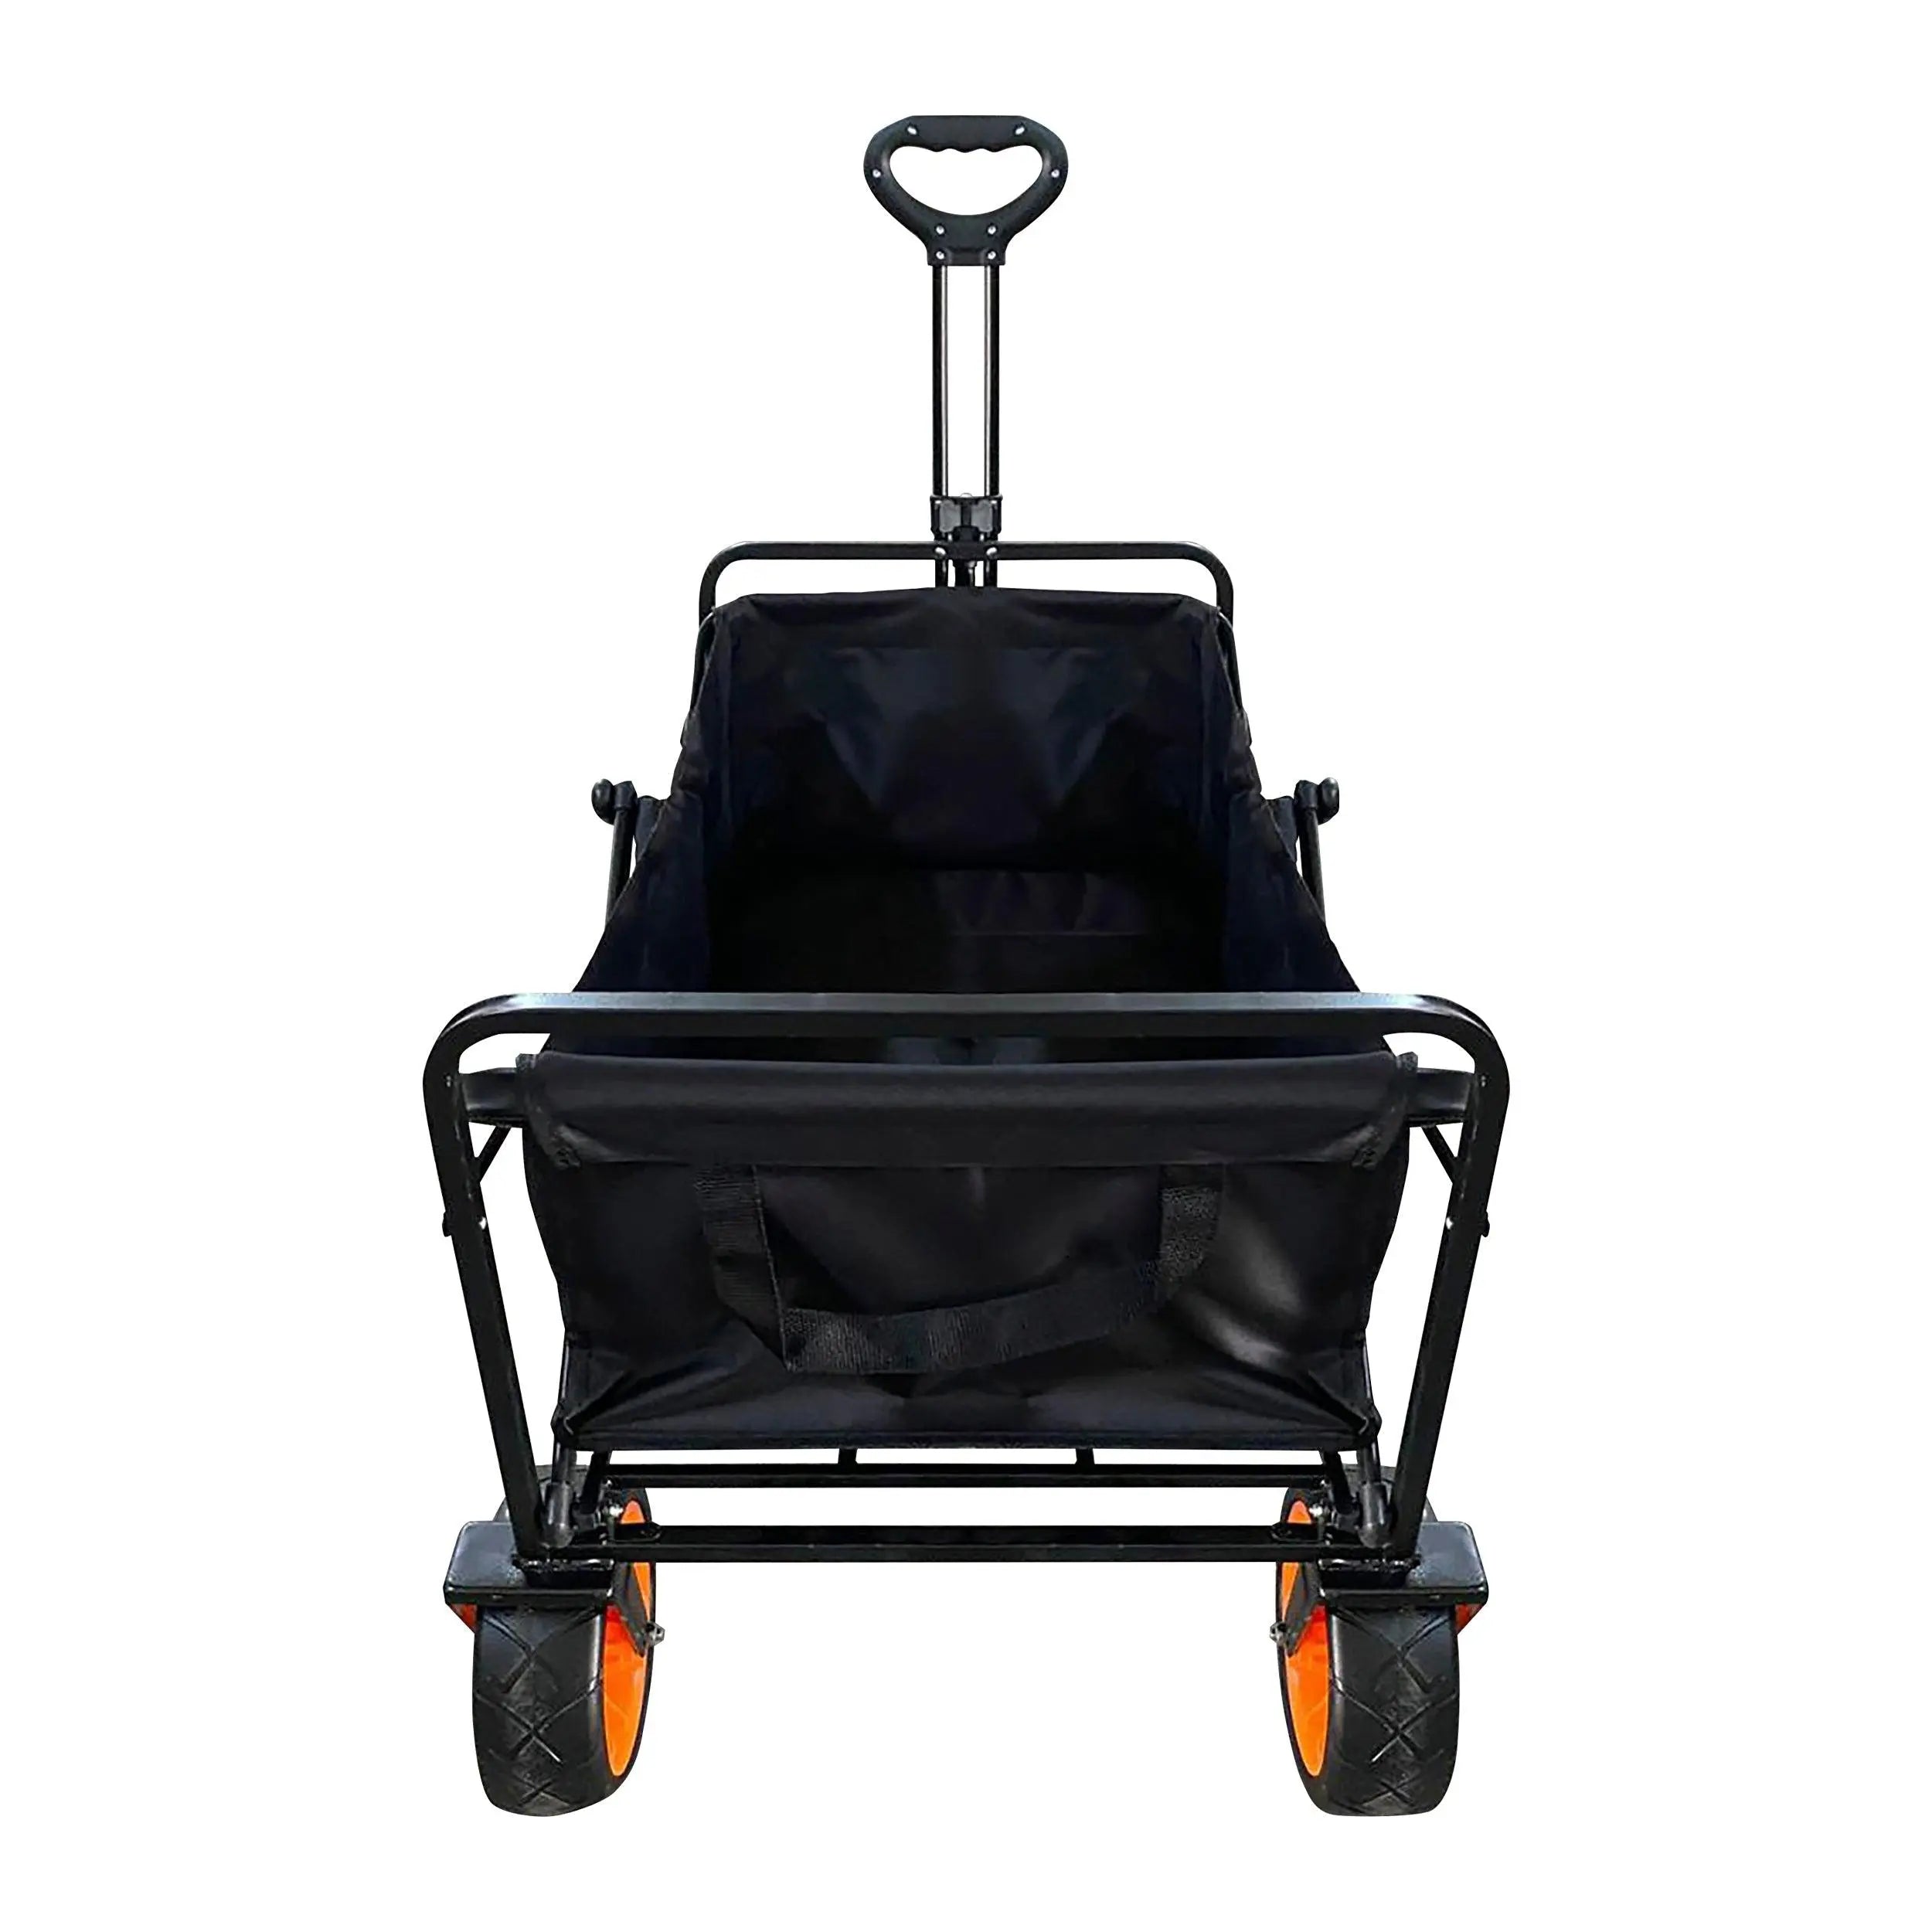  ASN - Carrito plegable con ruedas, carrito plegable con tapa,  caja de almacenamiento de plástico con asa en el maletero, 8 ruedas  giratorias, gran capacidad de 65 litros (color negro) 